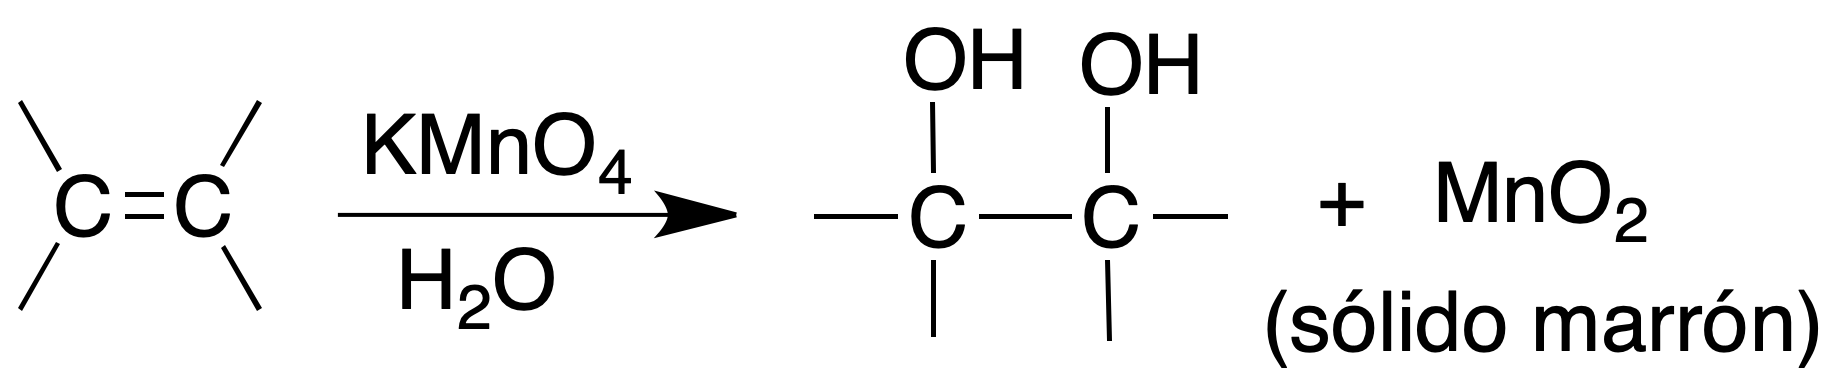 Baeyer's test or permanganate test for alkenes